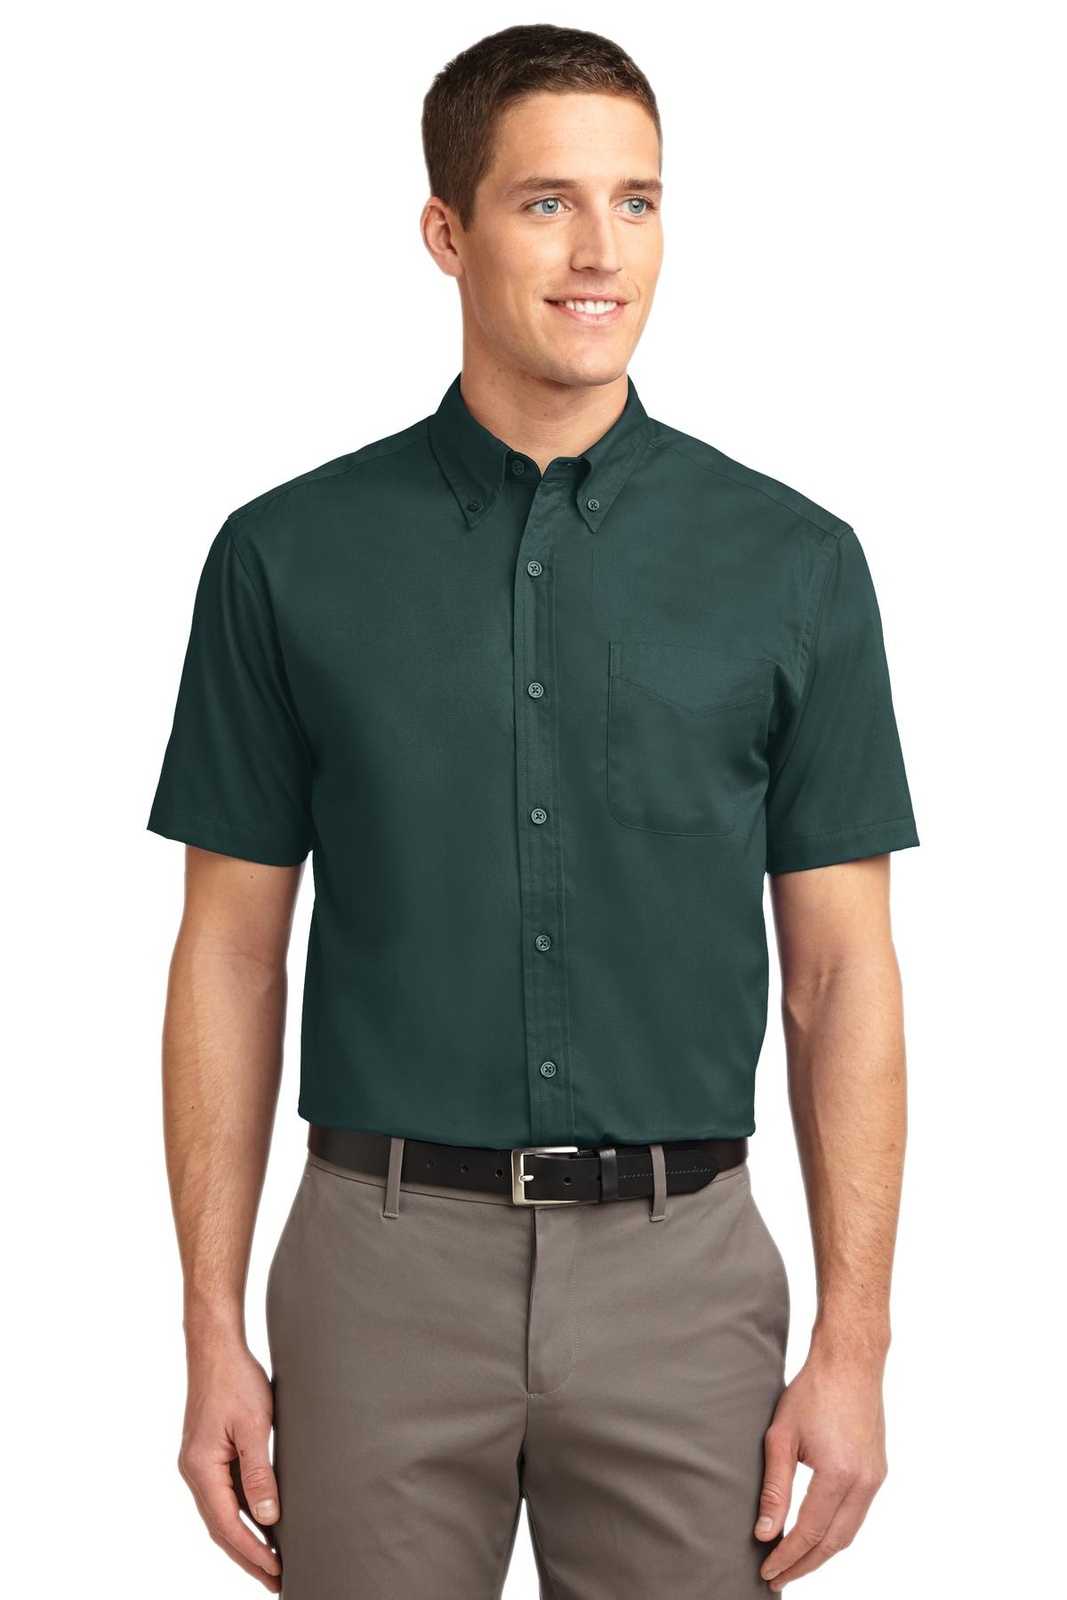 Port Authority S508 Short Sleeve Easy Care Shirt - Dark Green Navy - HIT a Double - 1